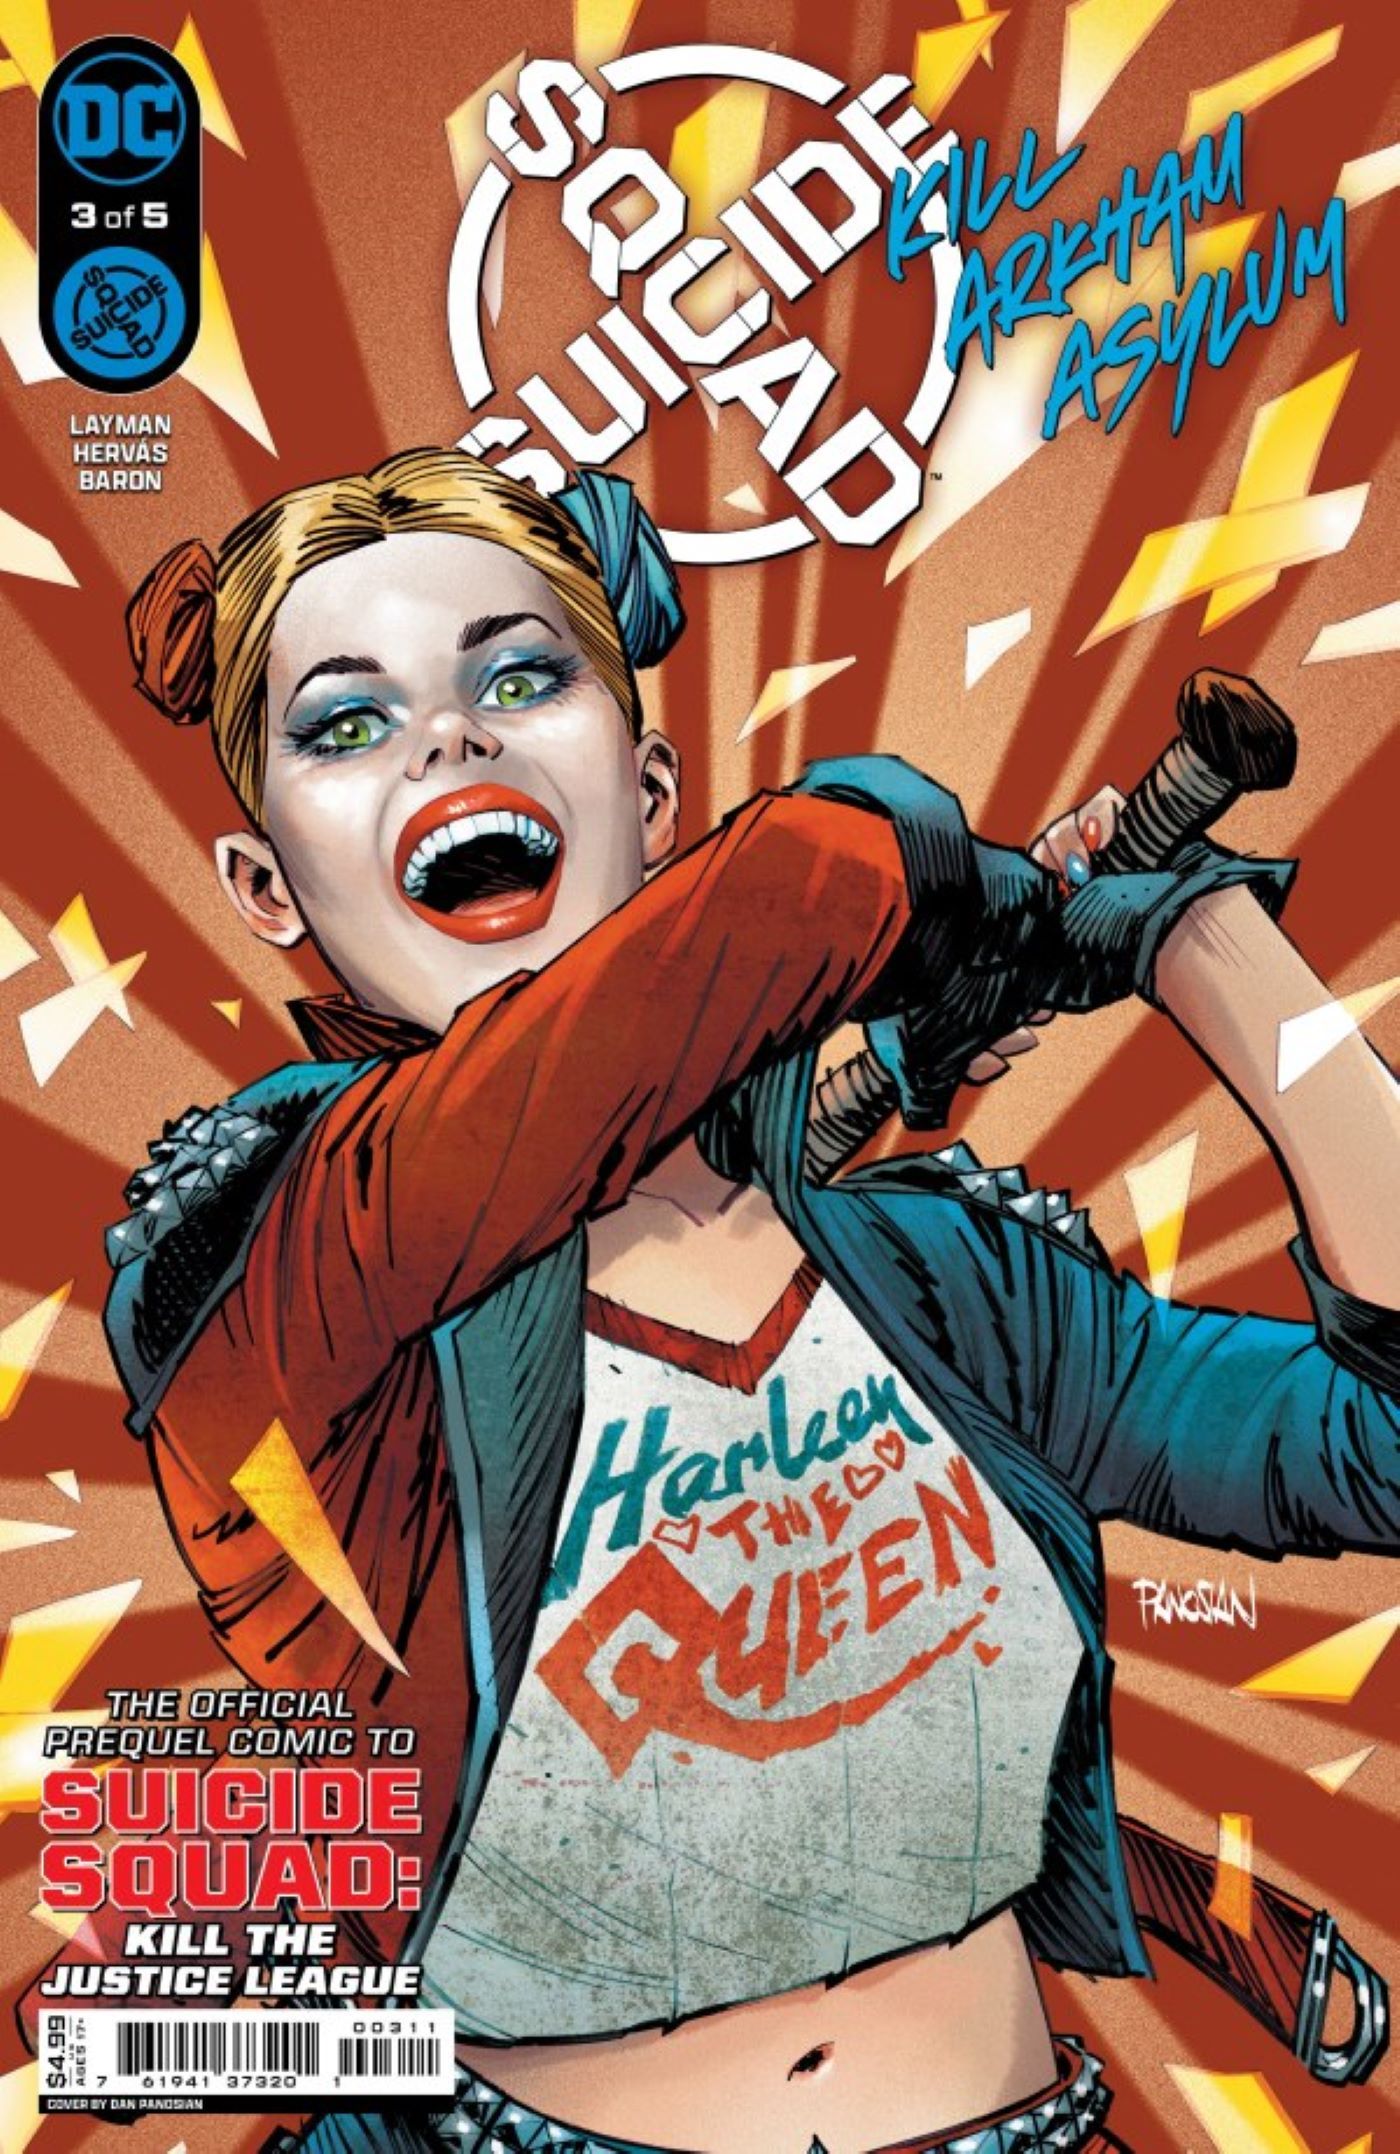 Suicide Squad Kill Arkham Asylum #3 cover featuring Harley Quinn